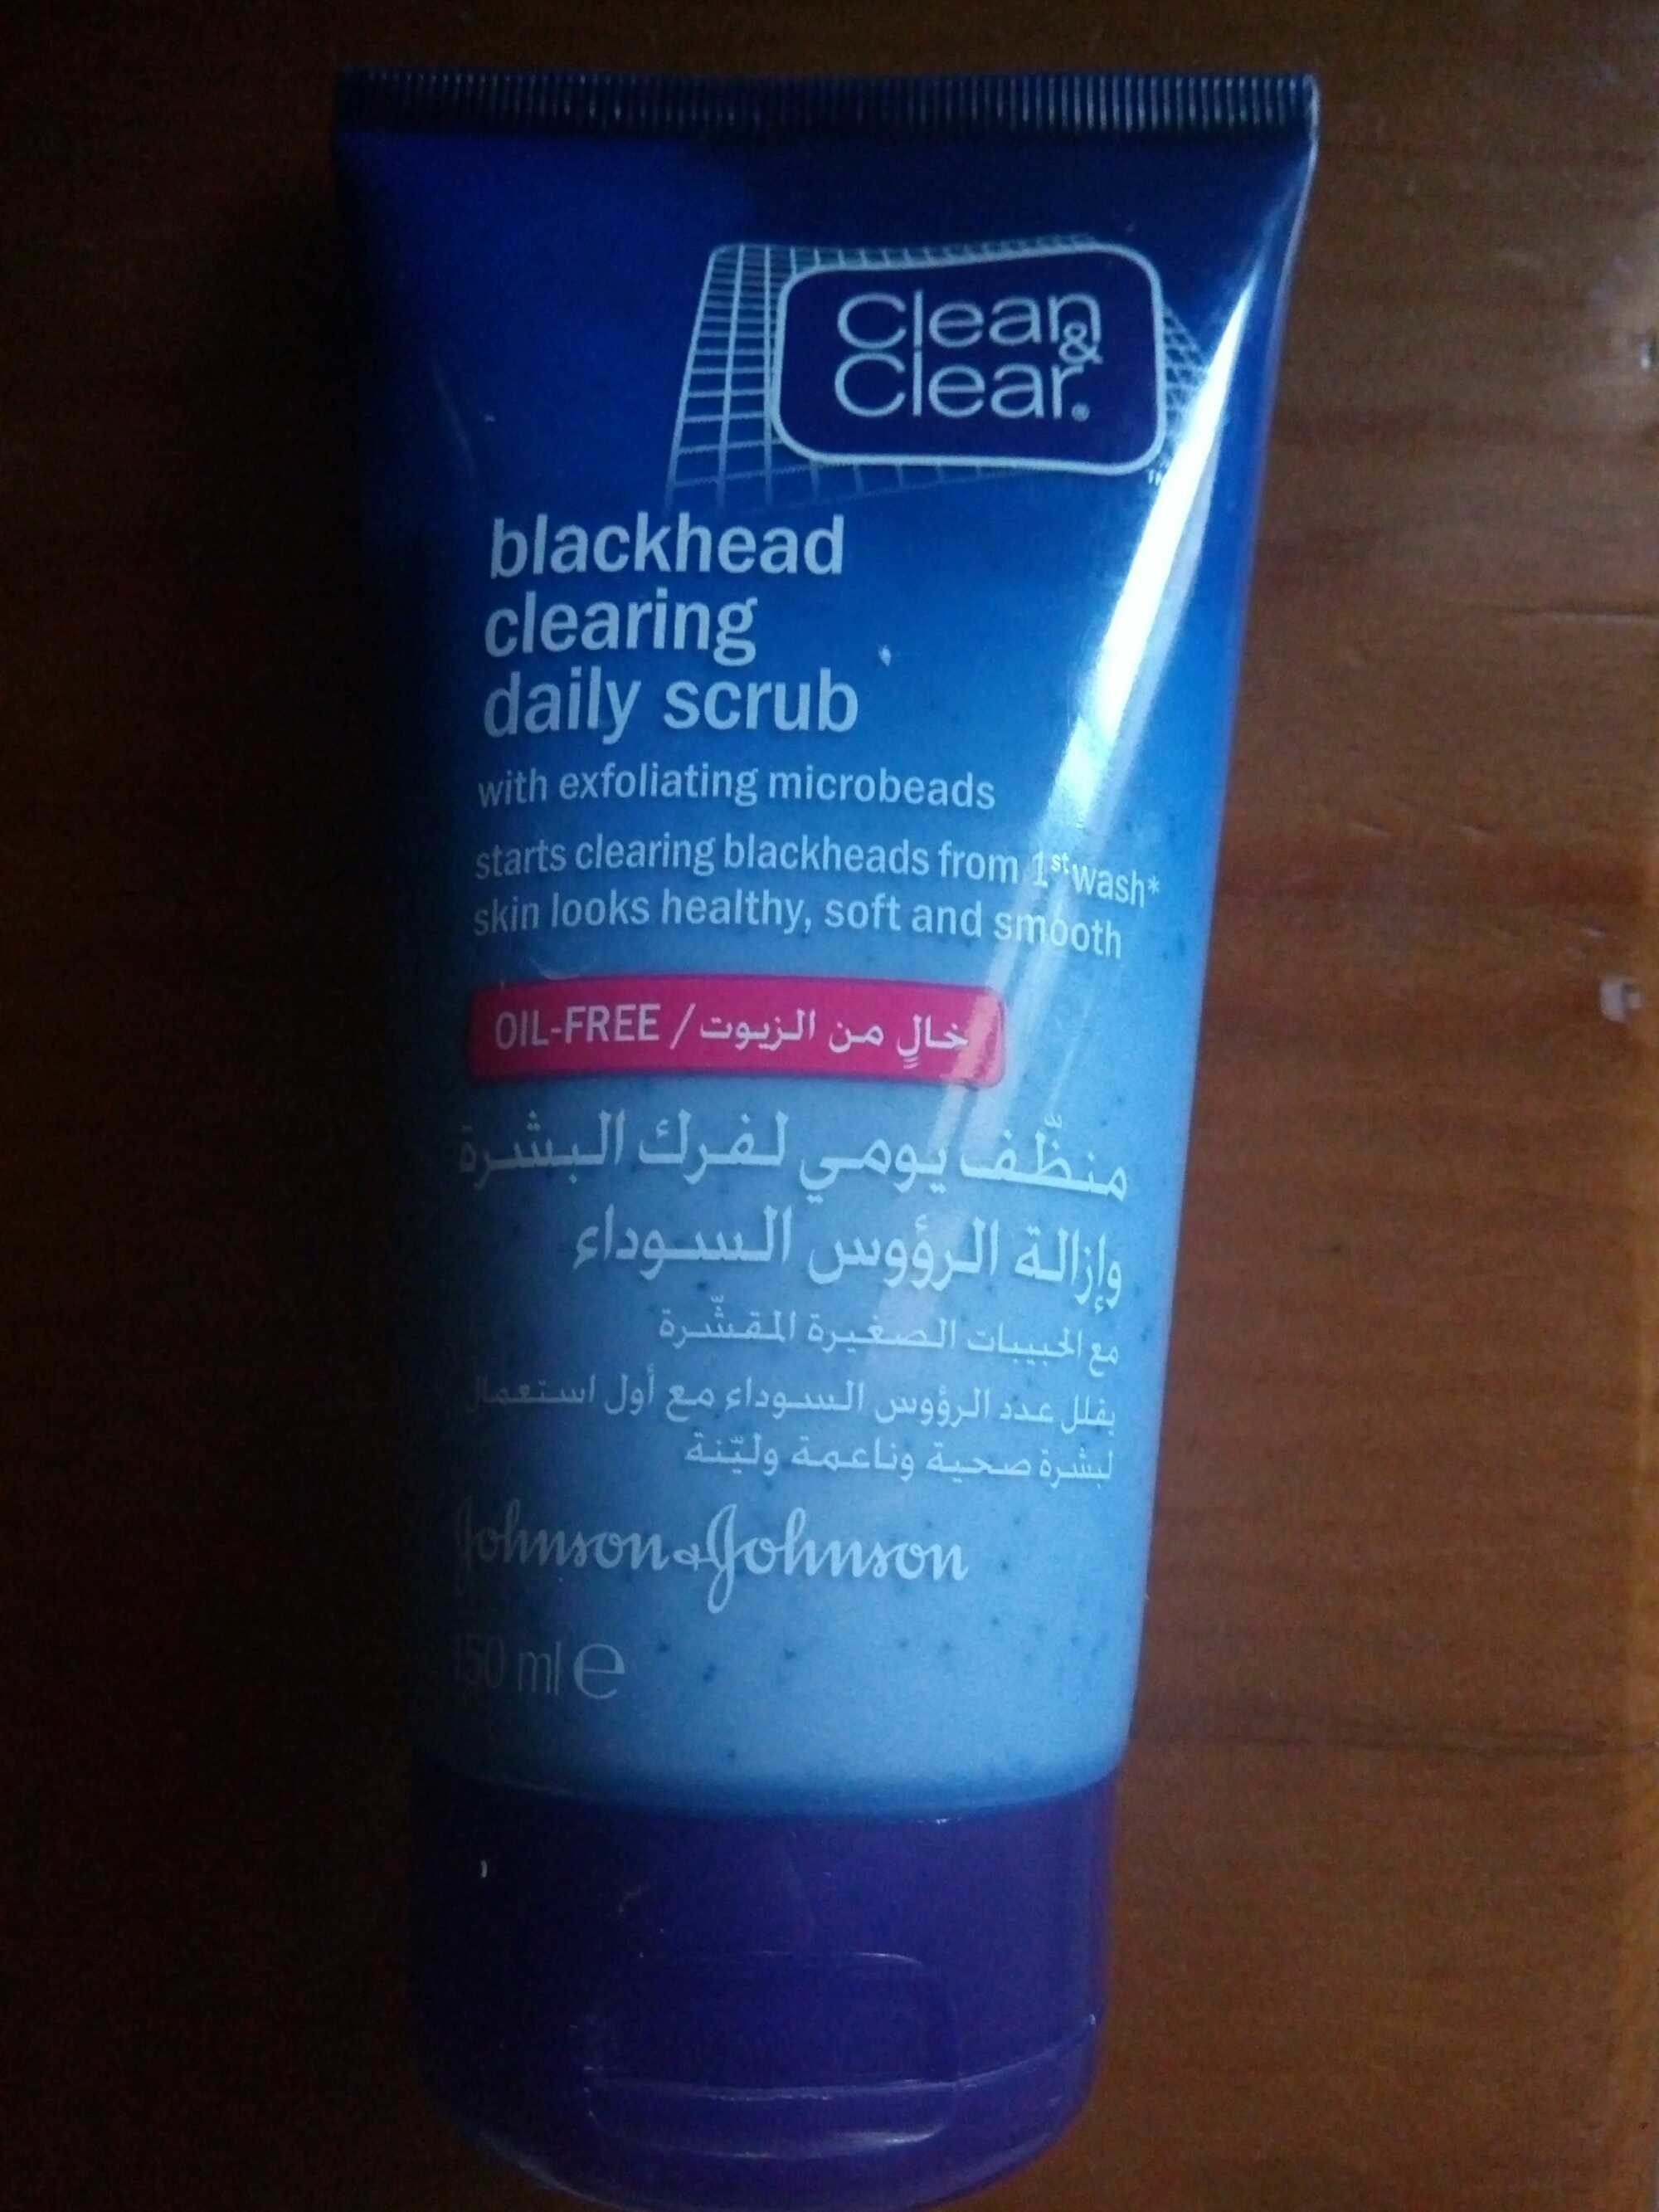 Blackhead clearing daily scrub - 製品 - fr